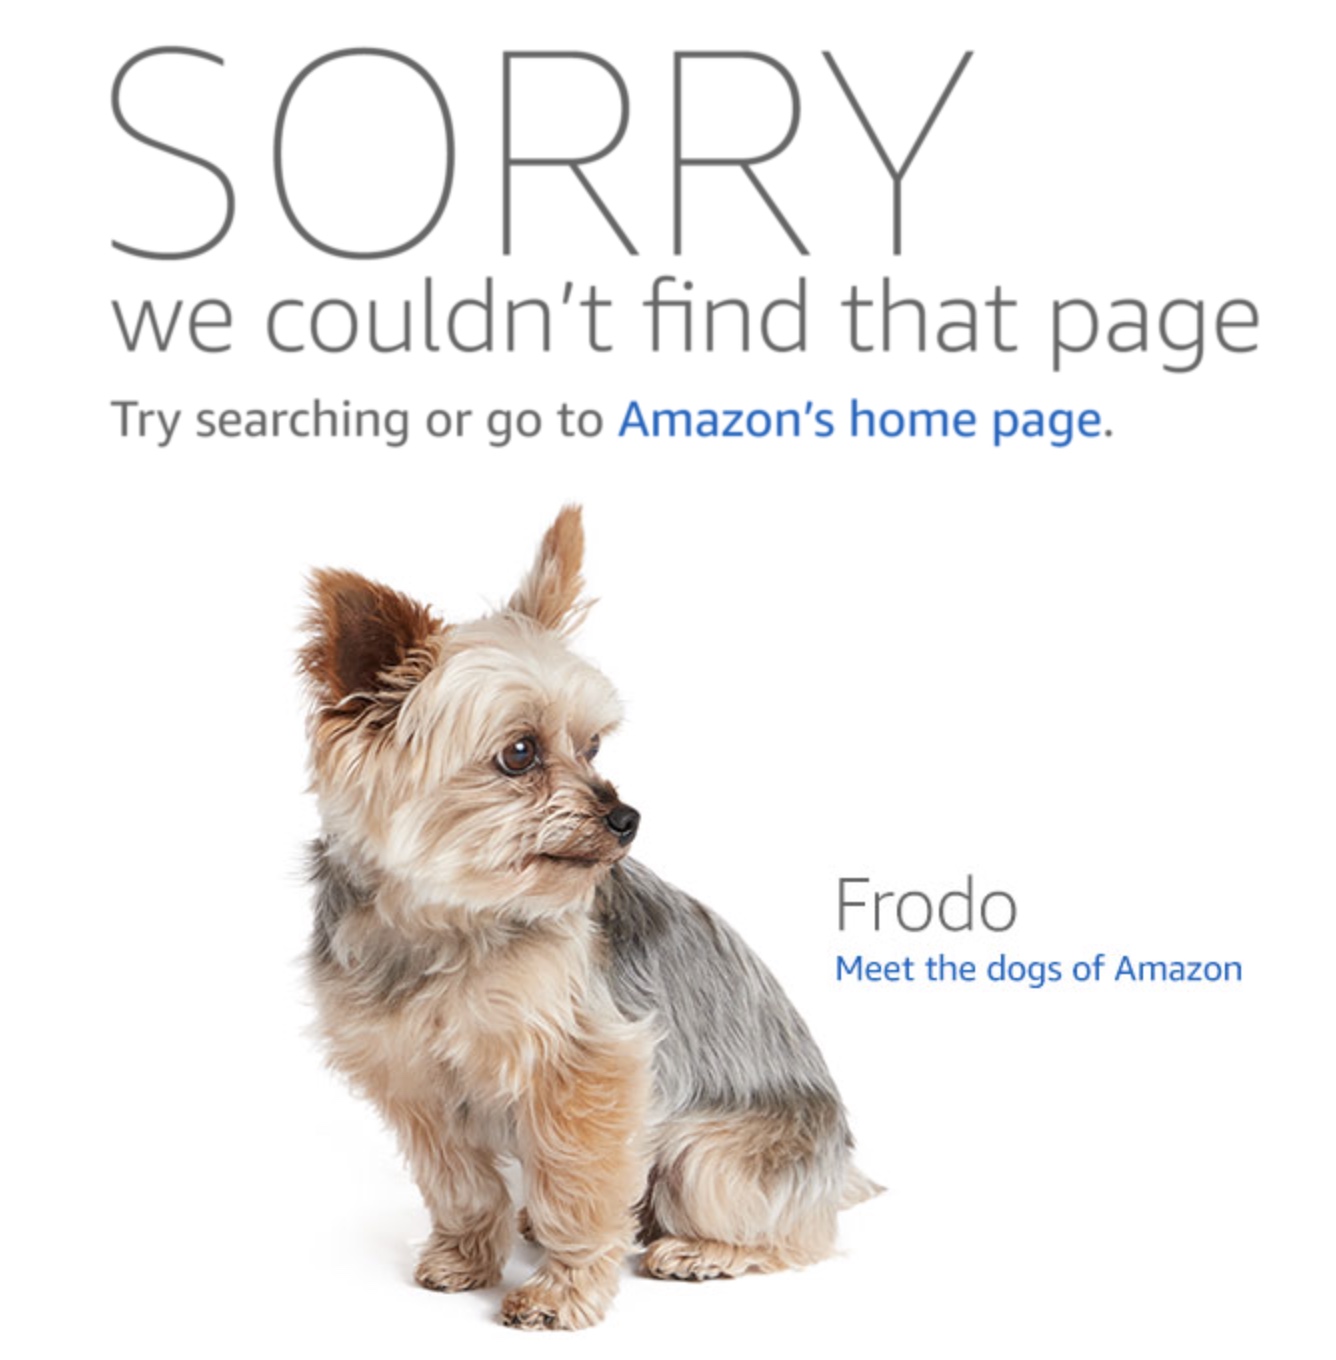 Amazon's custom 404 page